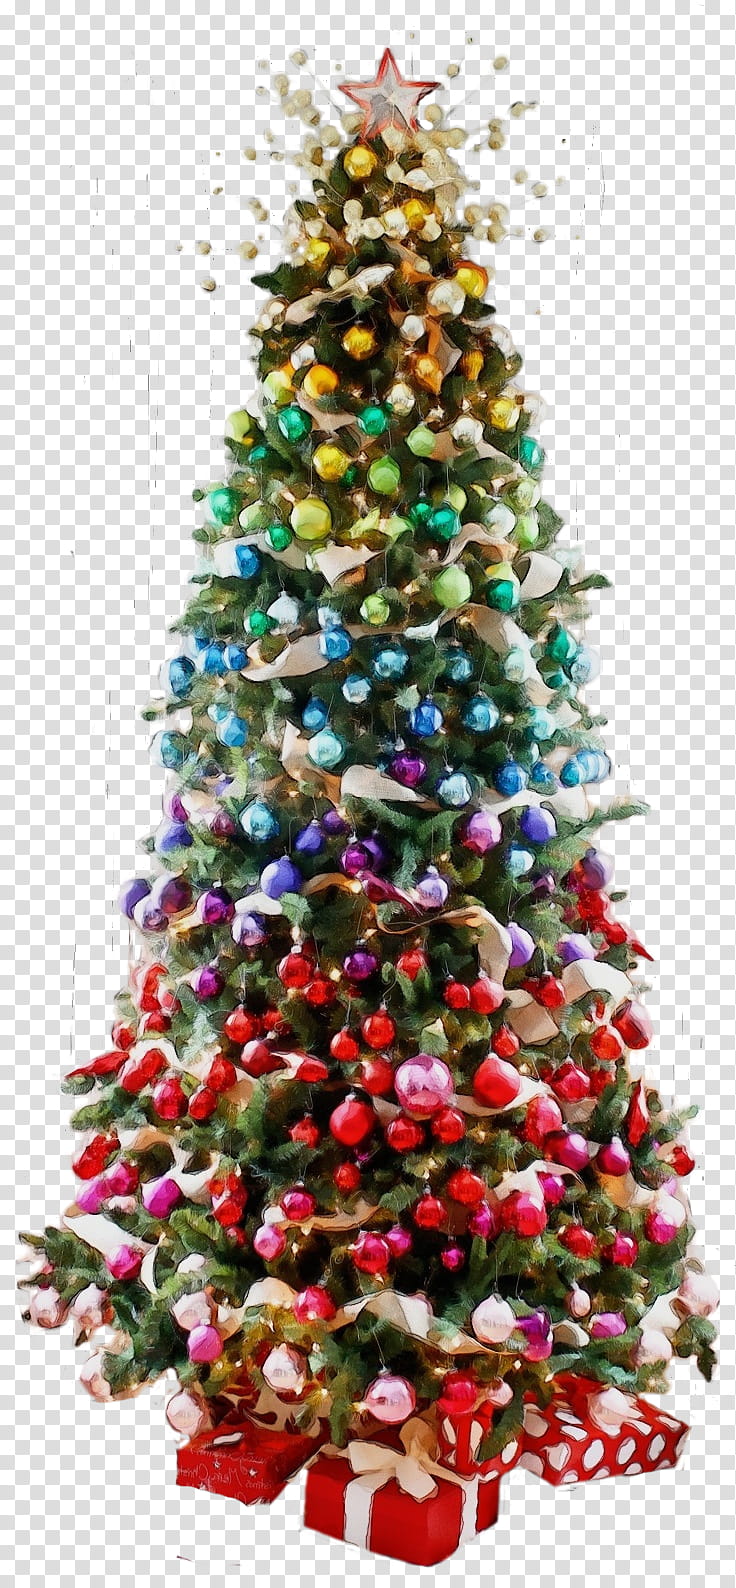 Christmas tree, Watercolor, Paint, Wet Ink, Christmas Decoration, Christmas Ornament, Oregon Pine, Colorado Spruce transparent background PNG clipart